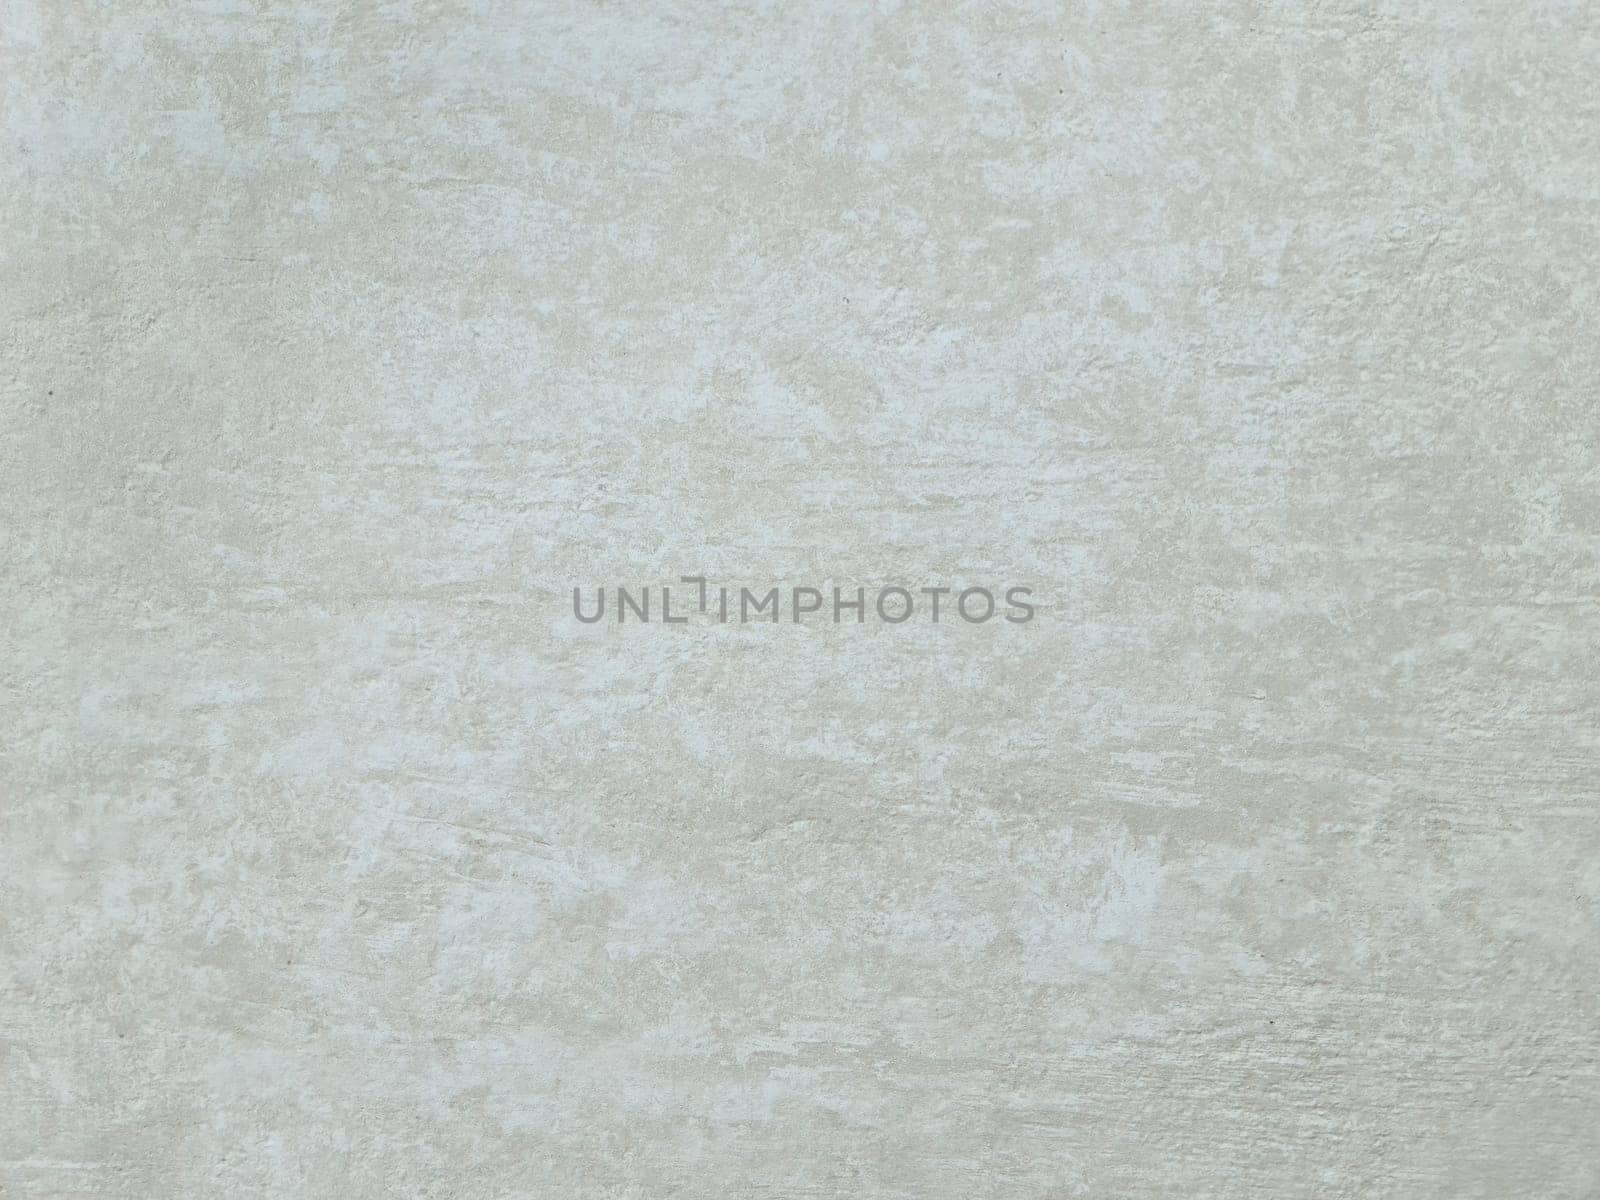 Background of gray decorative heterogeneous plaster with streaks by Rom4ek